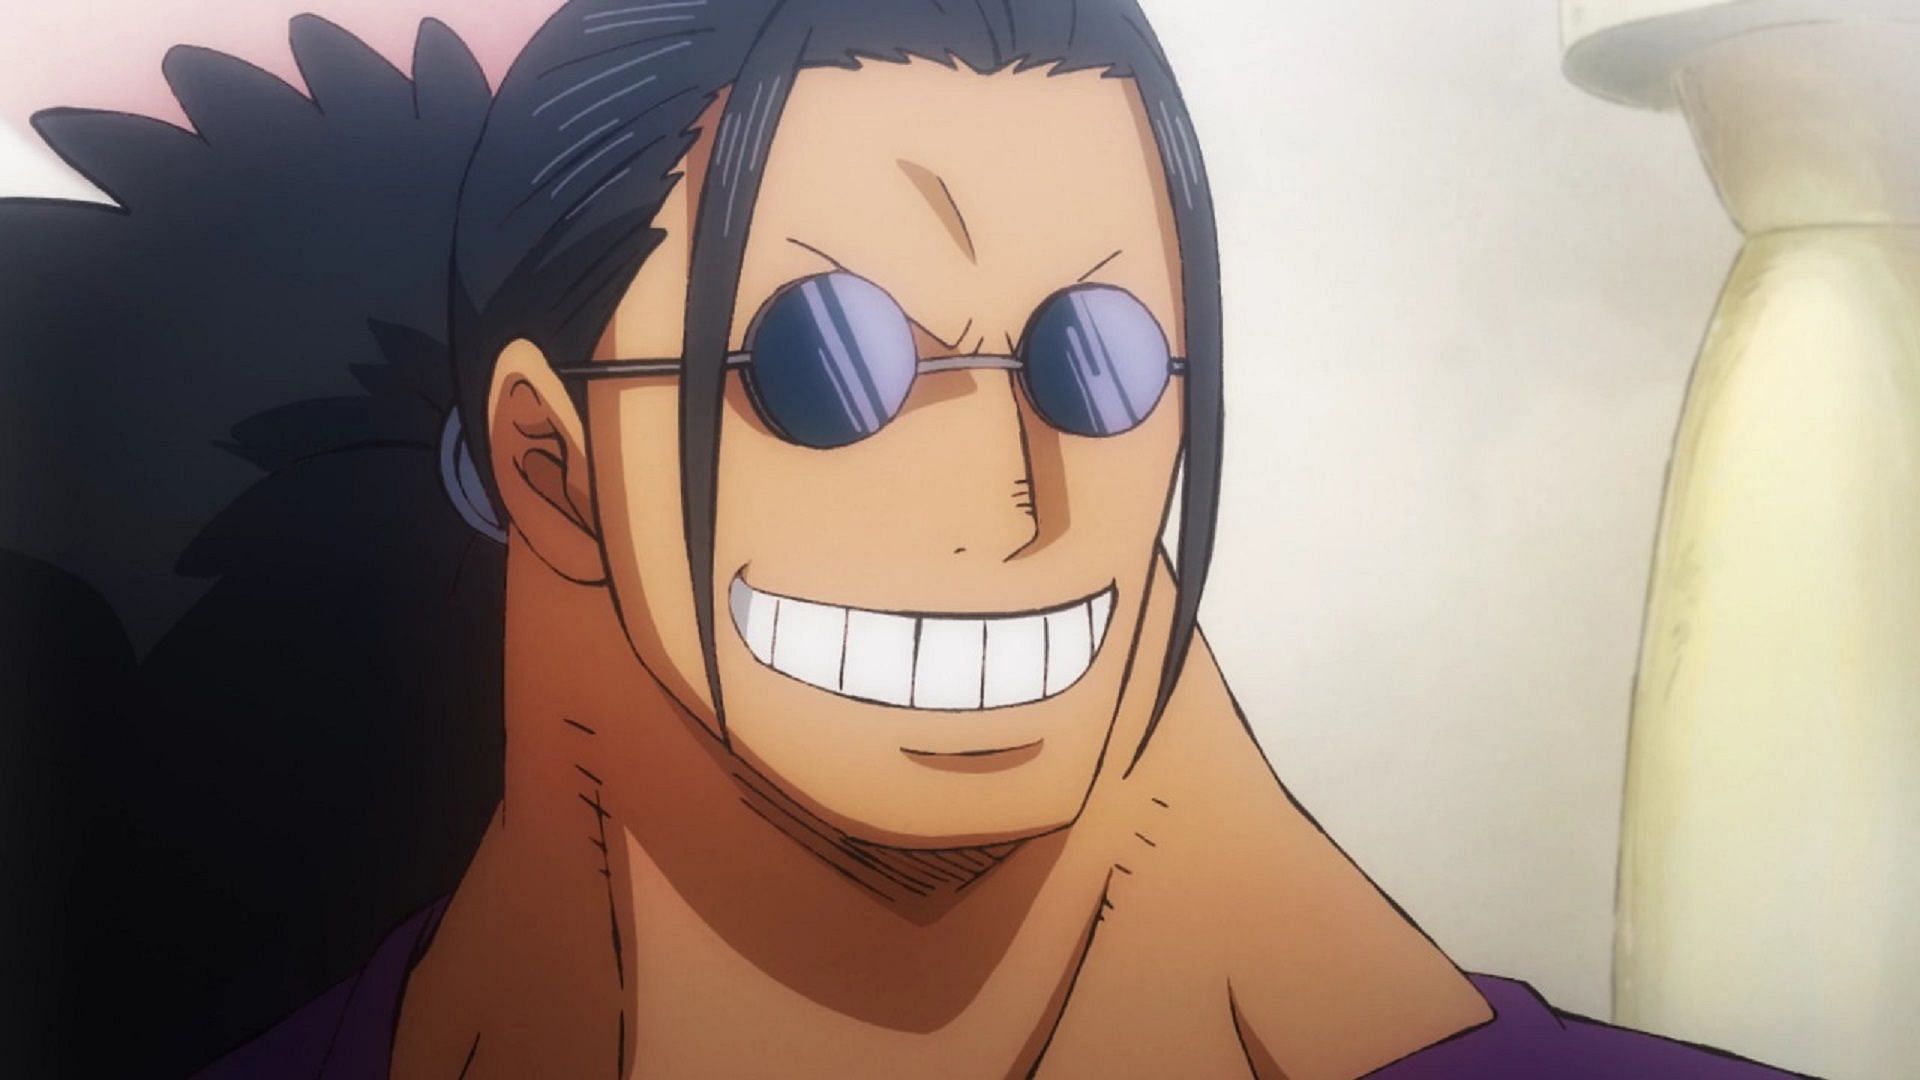 Scopper Gaban as seen in One Piece (Image via Toei Animation, One Piece)